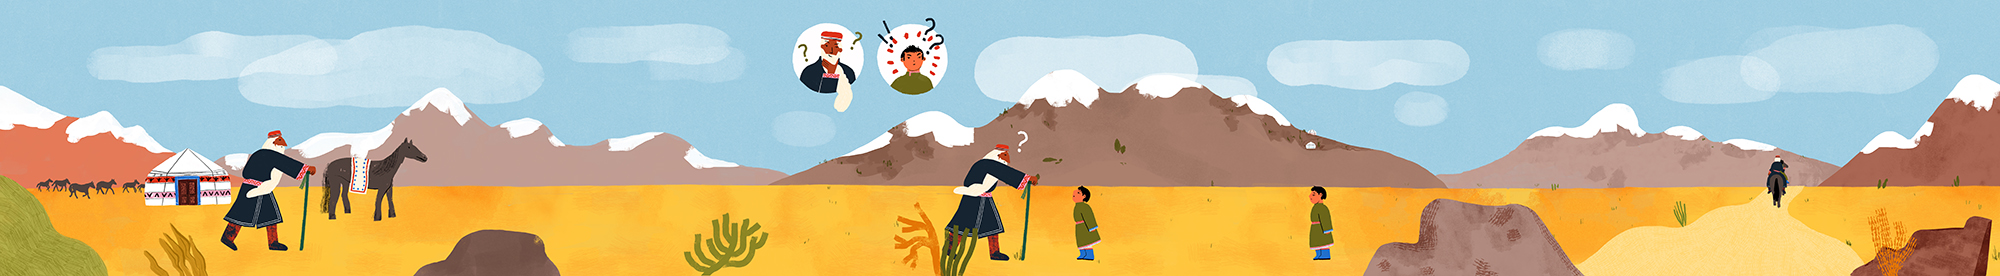 animation-background-landscape-sotrytelling-tales-mongolia-tent-horses-sky-mountains-child-old-man-illustration-violeta-noy